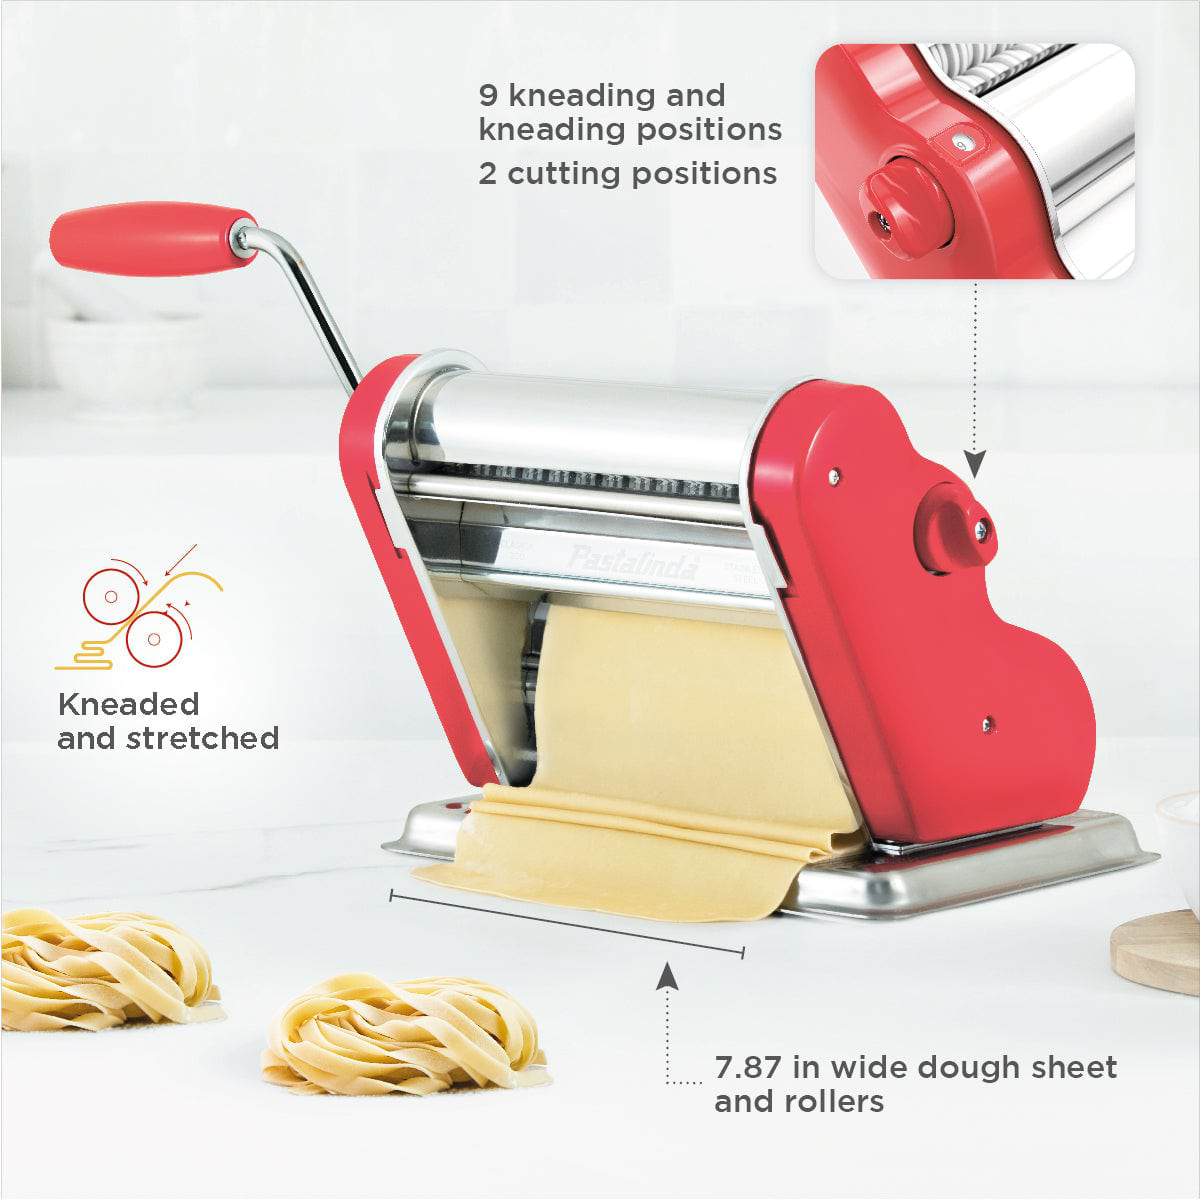 Pastalinda Classic 200 Coral Pasta Maker Machine